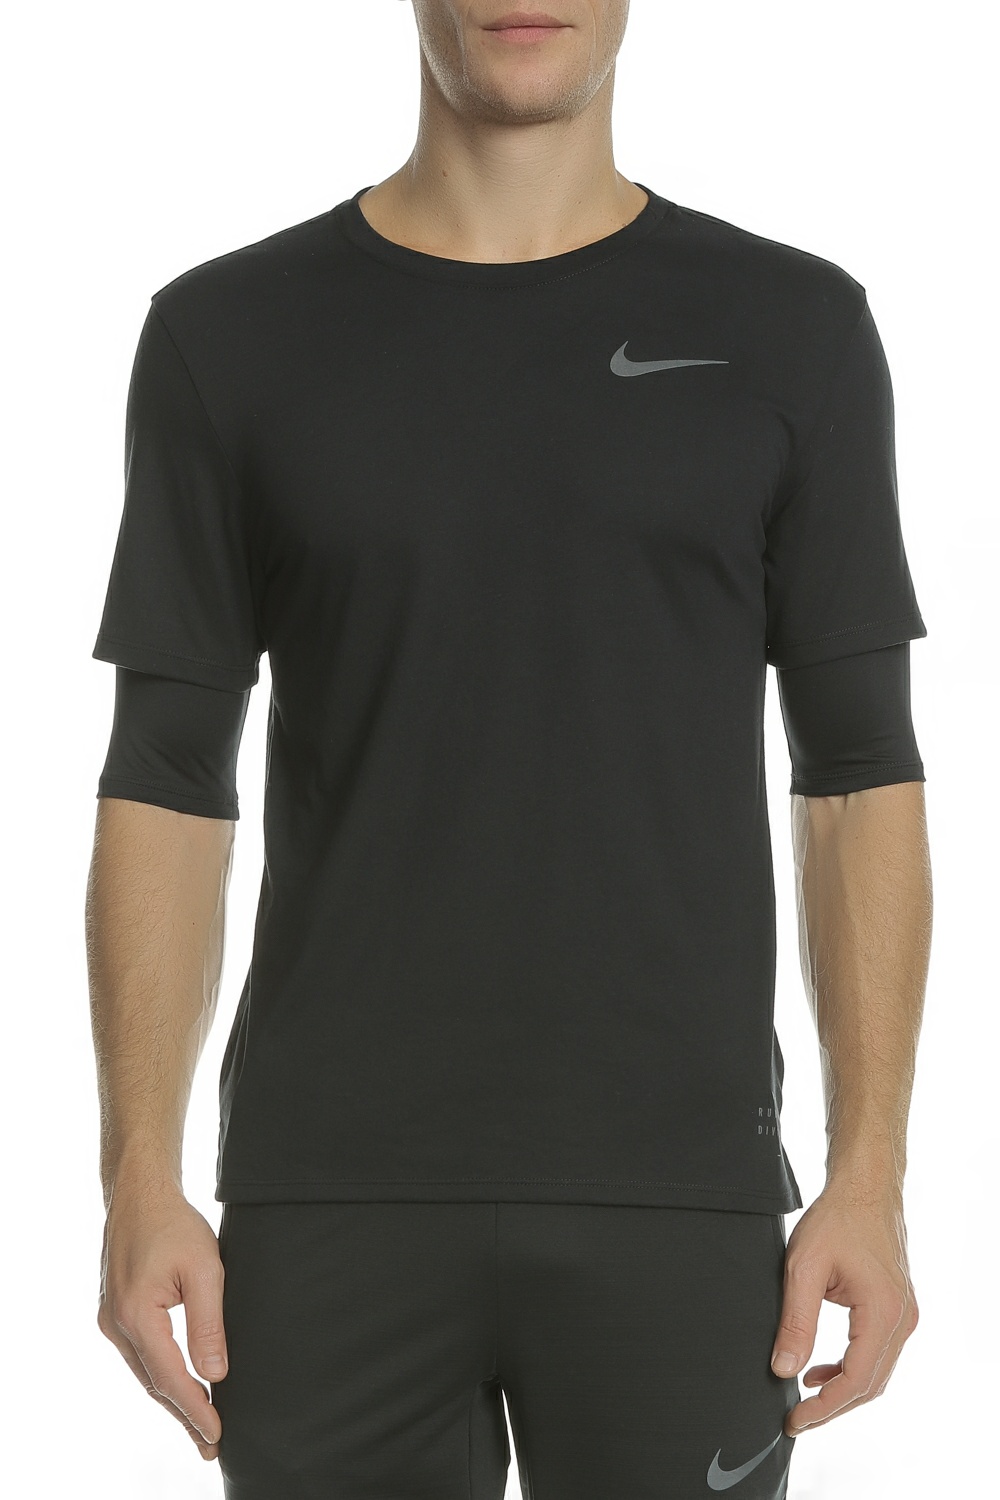 NIKE - Ανδρική μπλούζα NIKE BRTHE RISE 365 TOP SS RD μαύρη Ανδρικά/Ρούχα/Αθλητικά/T-shirt